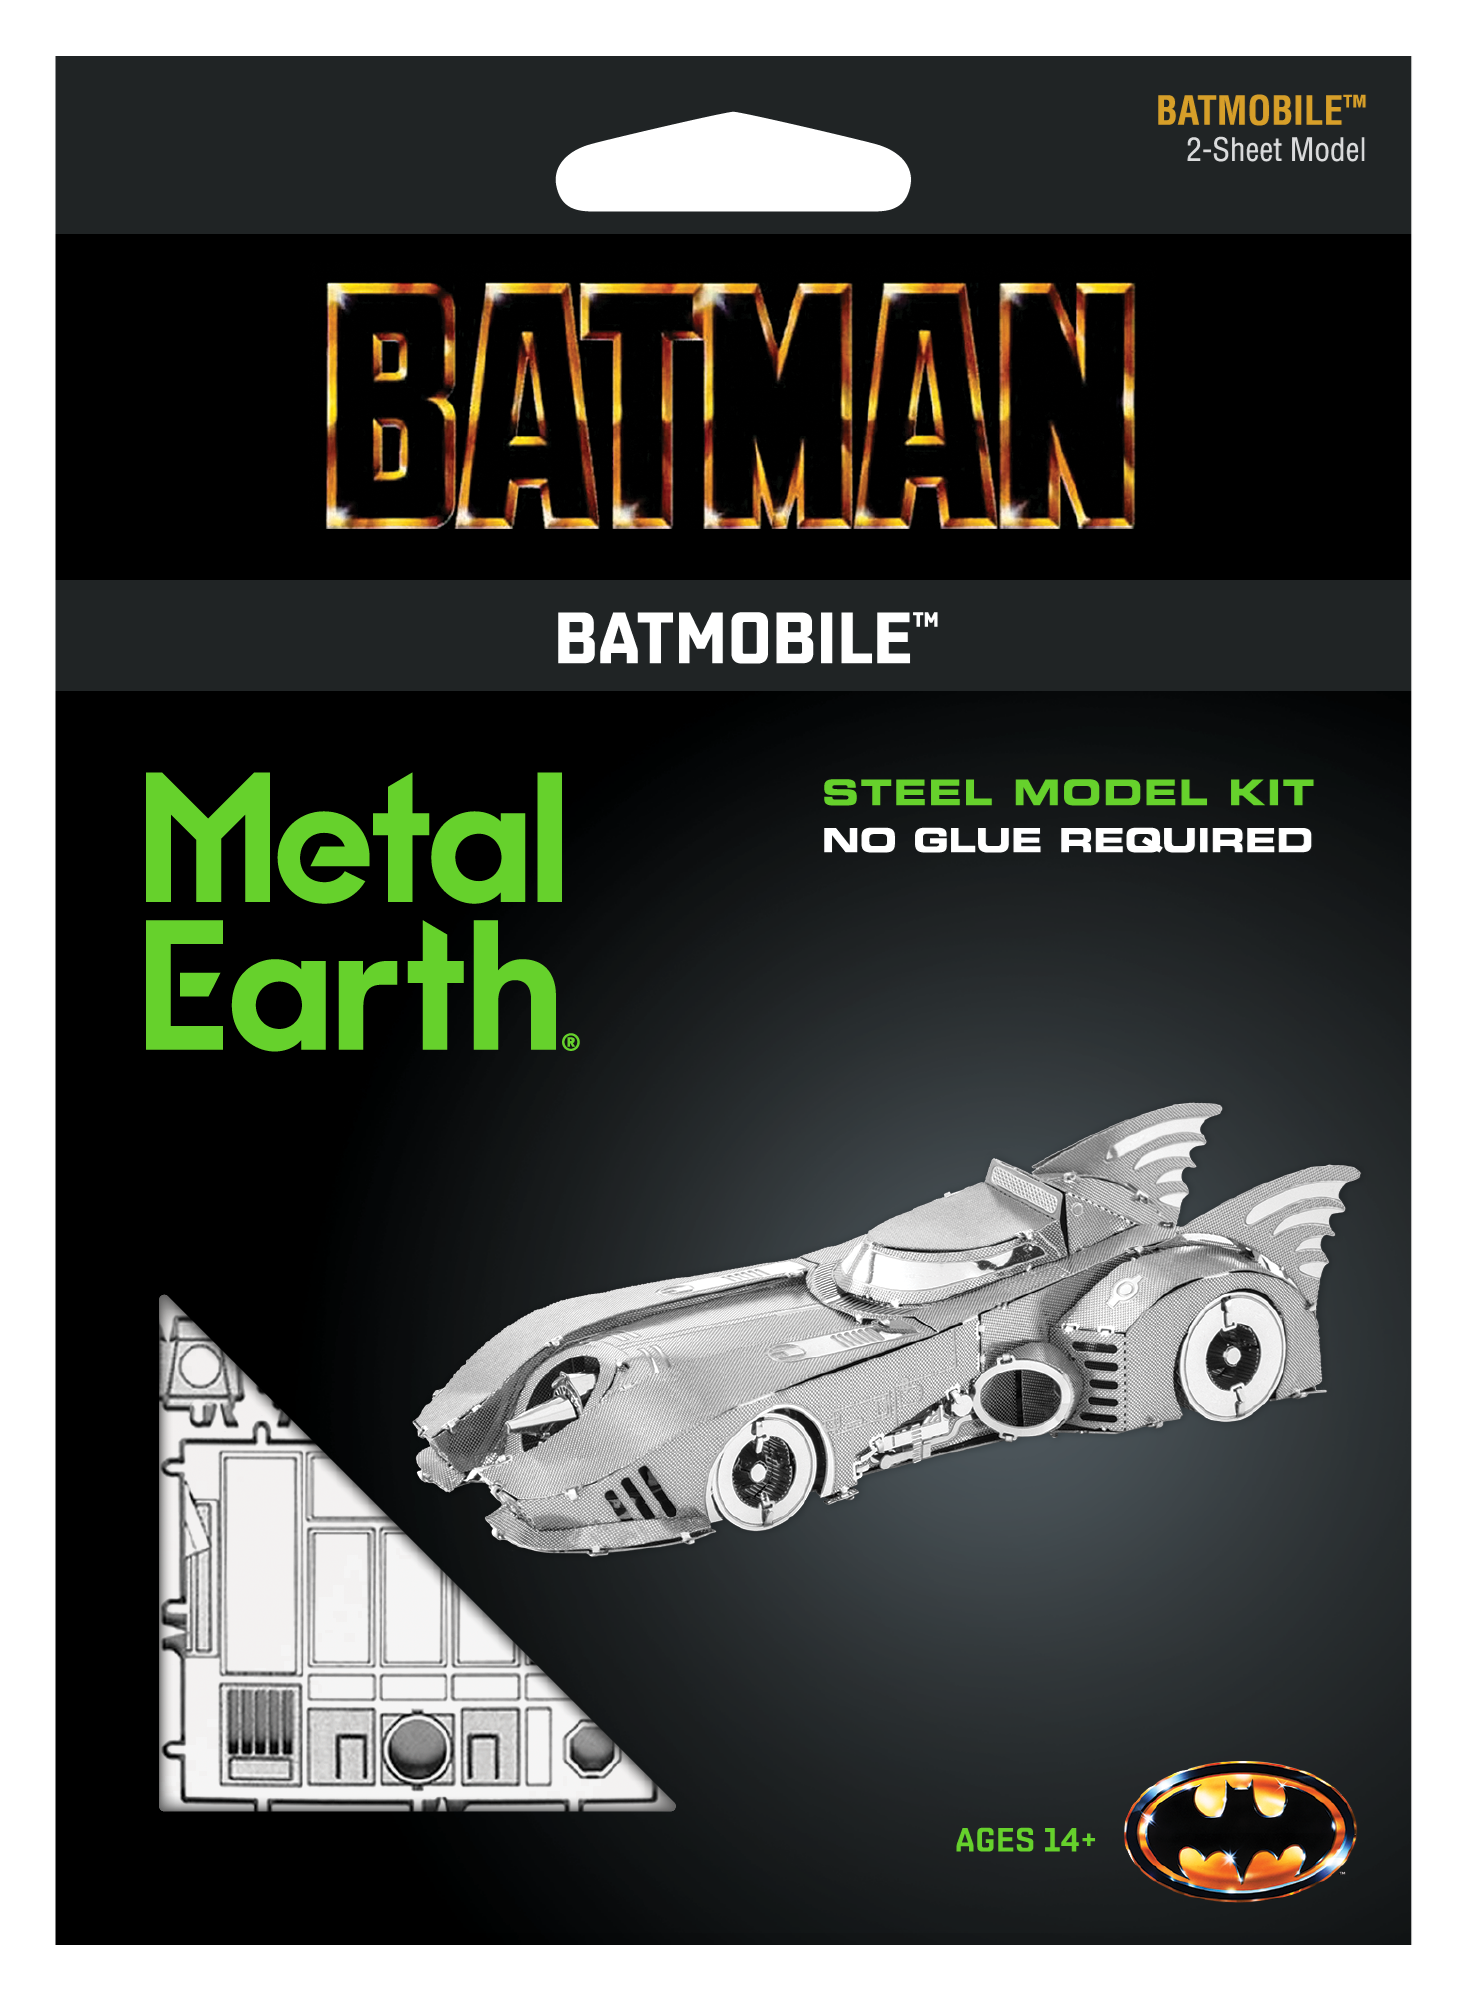 Metal Earth Steel Model Kit - 1989 Batmobile gift puzzle puzzle